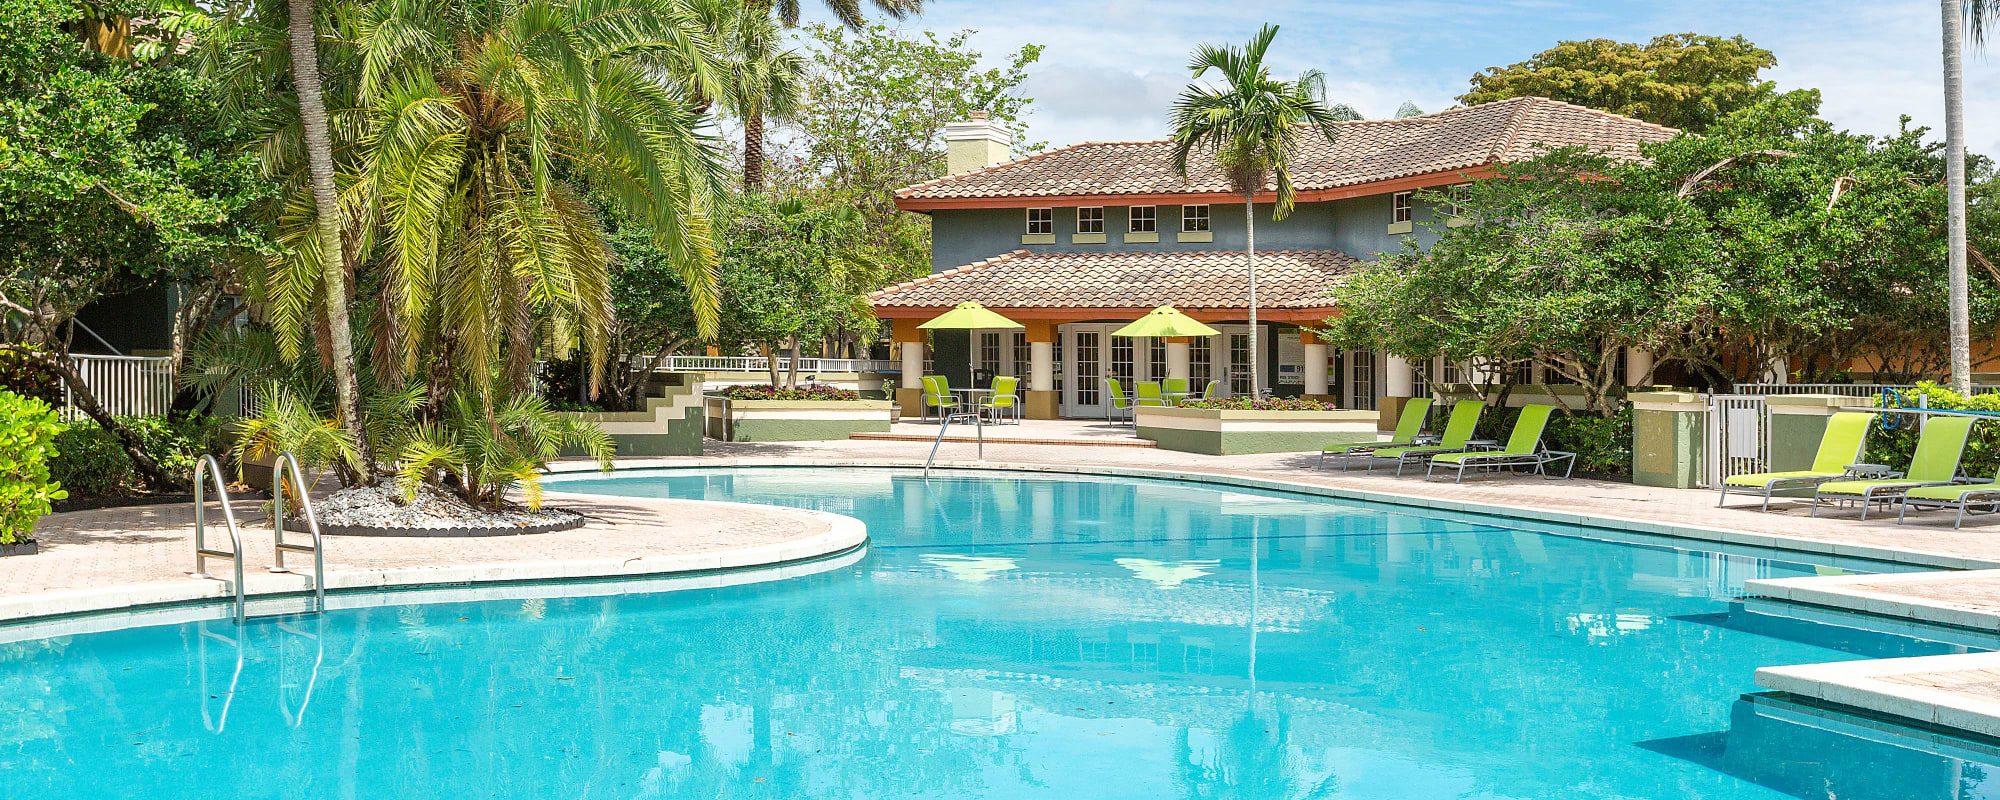 Contact us at Mosaic Apartments in Coral Springs, Florida